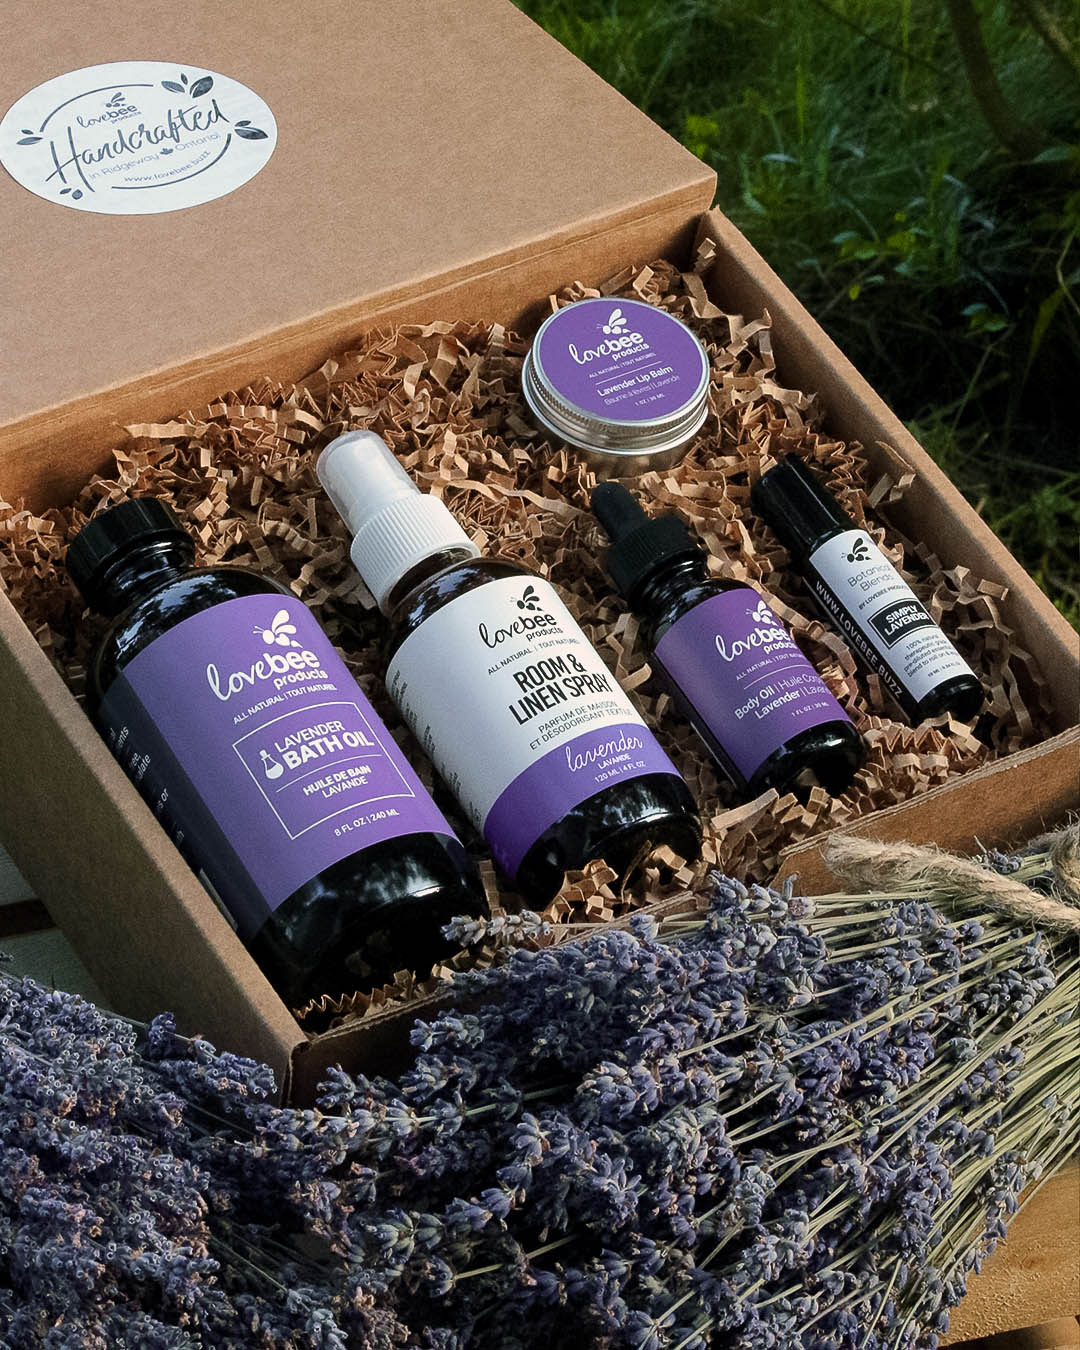 A lavender gift box